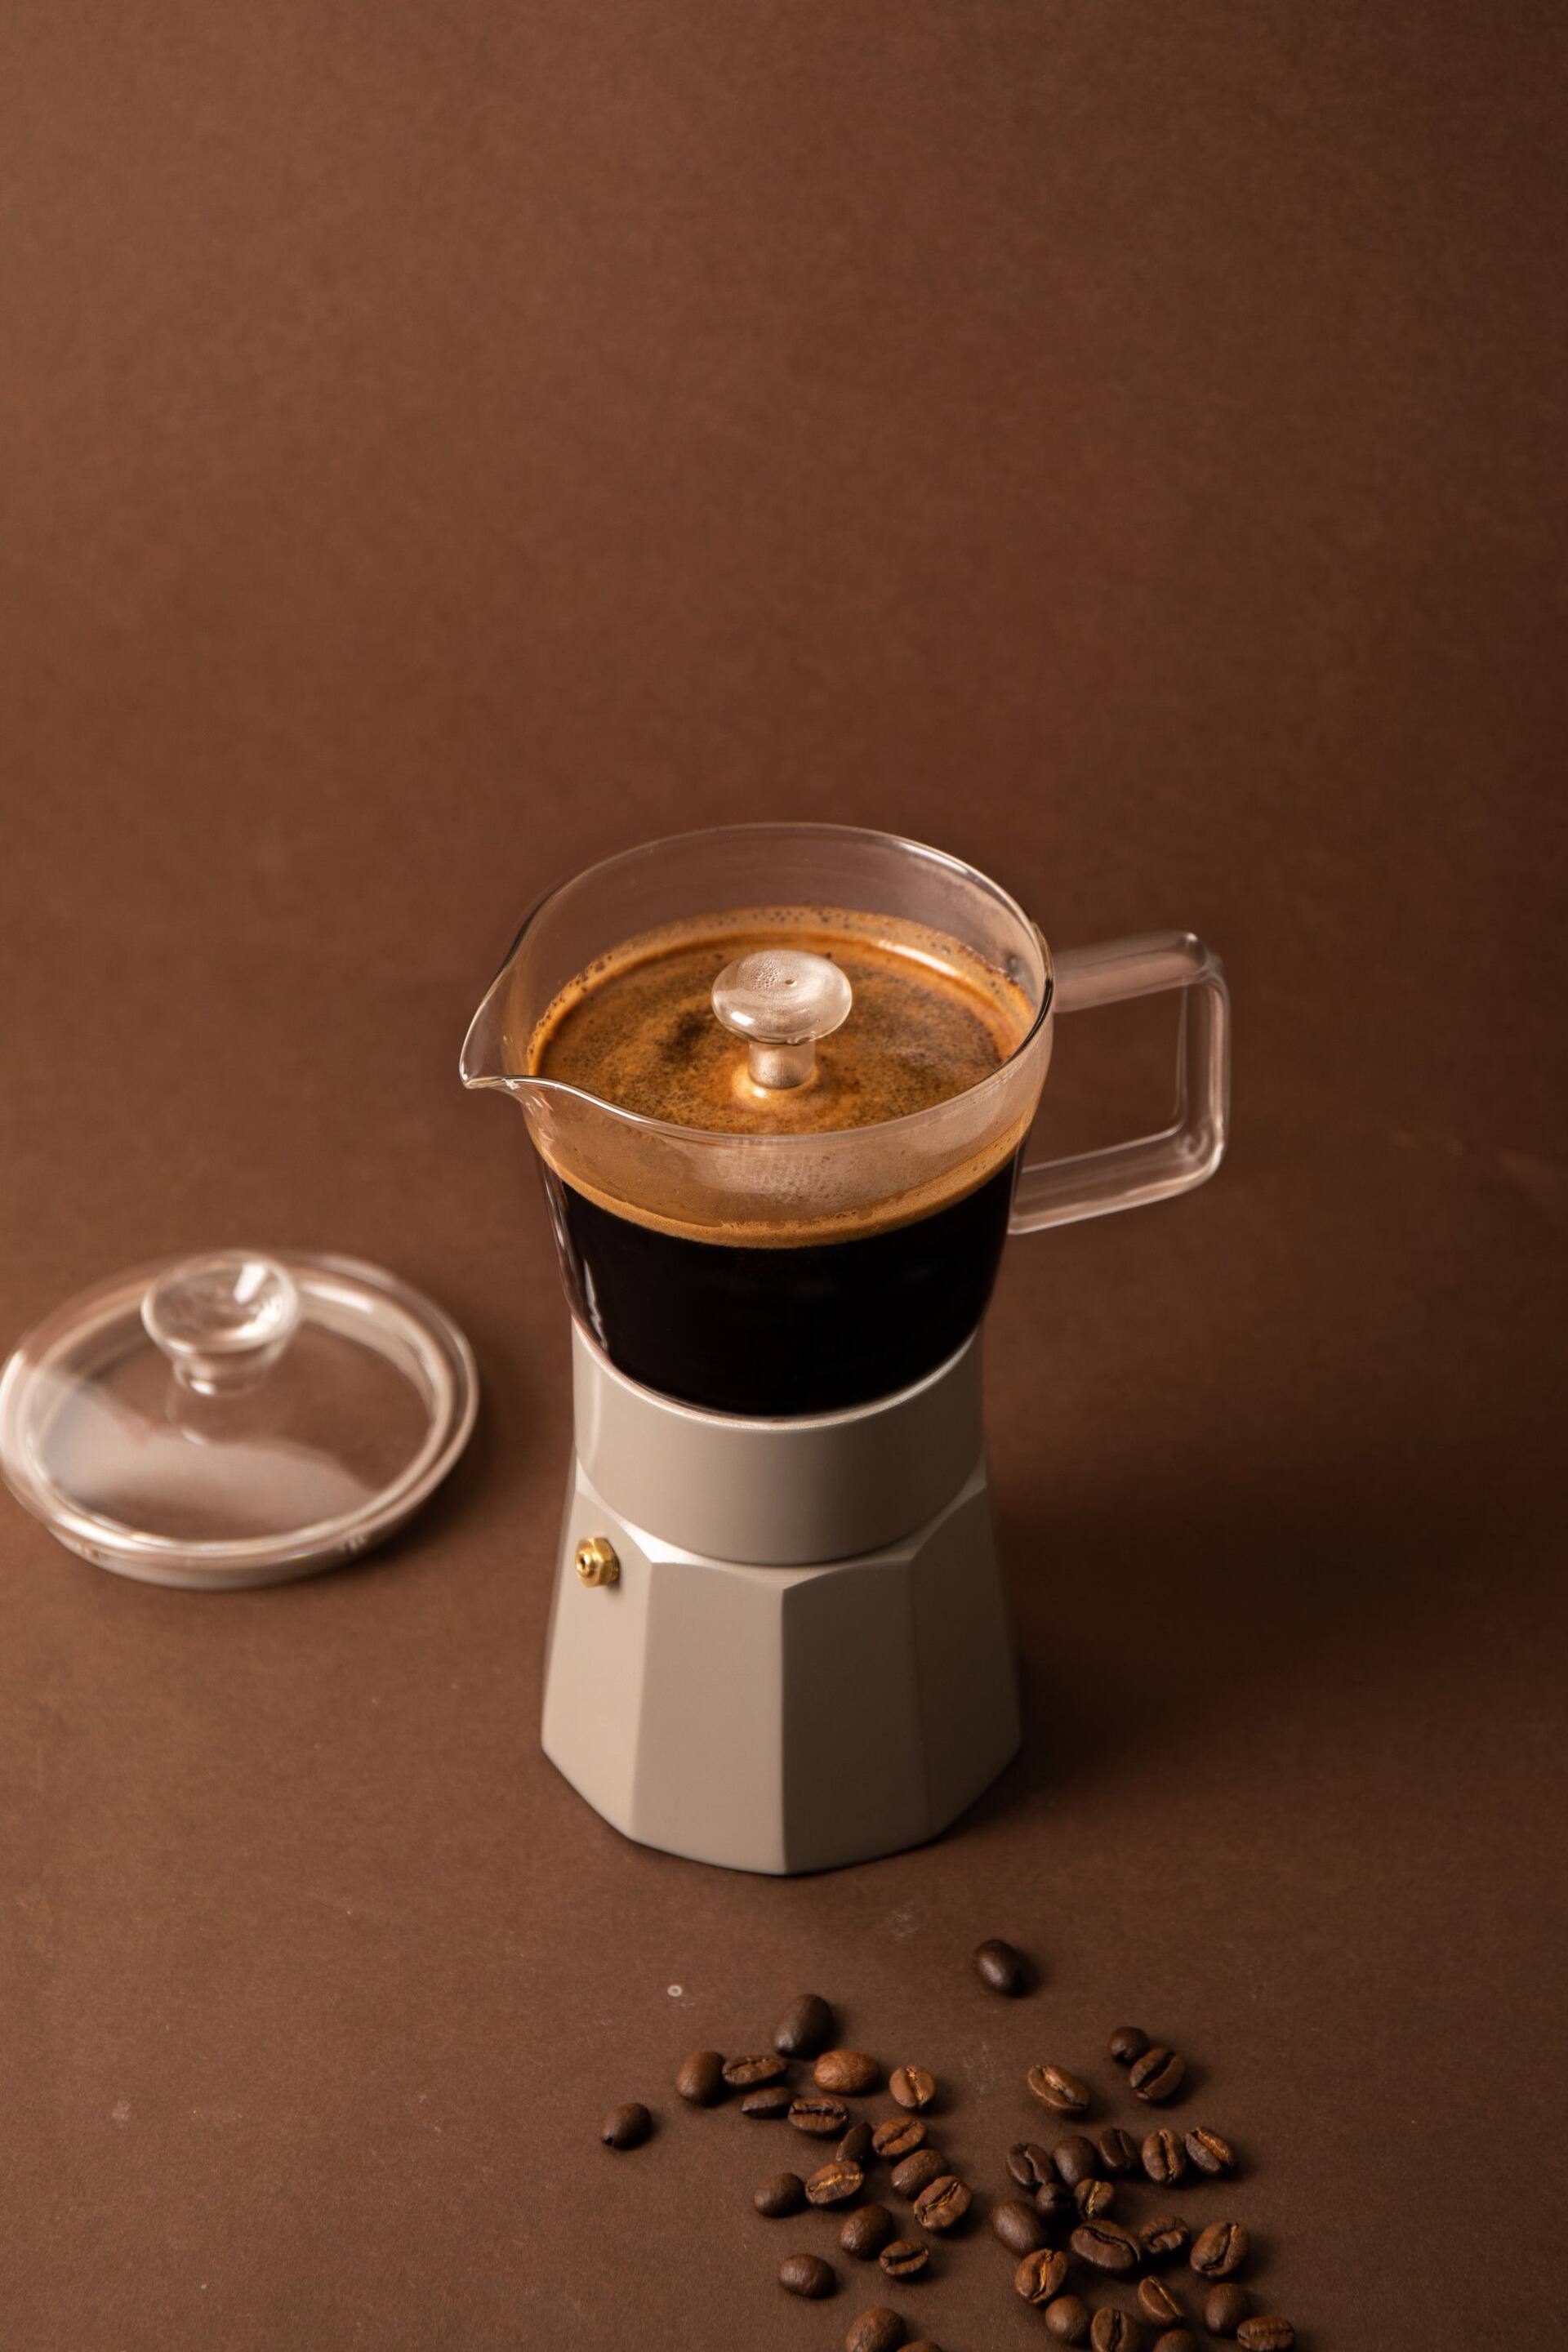 La Cafetière Cream 6 Cup Glass Espresso Maker - Image 1 of 2